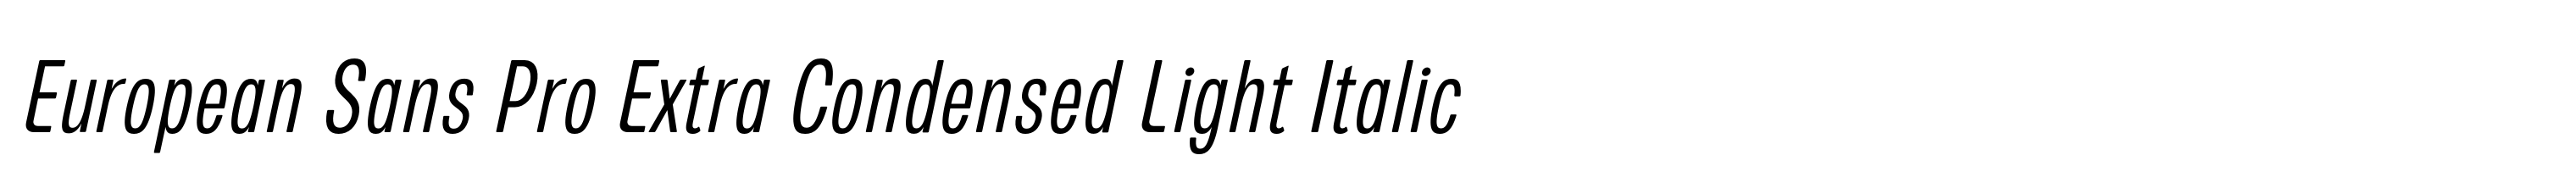 European Sans Pro Extra Condensed Light Italic